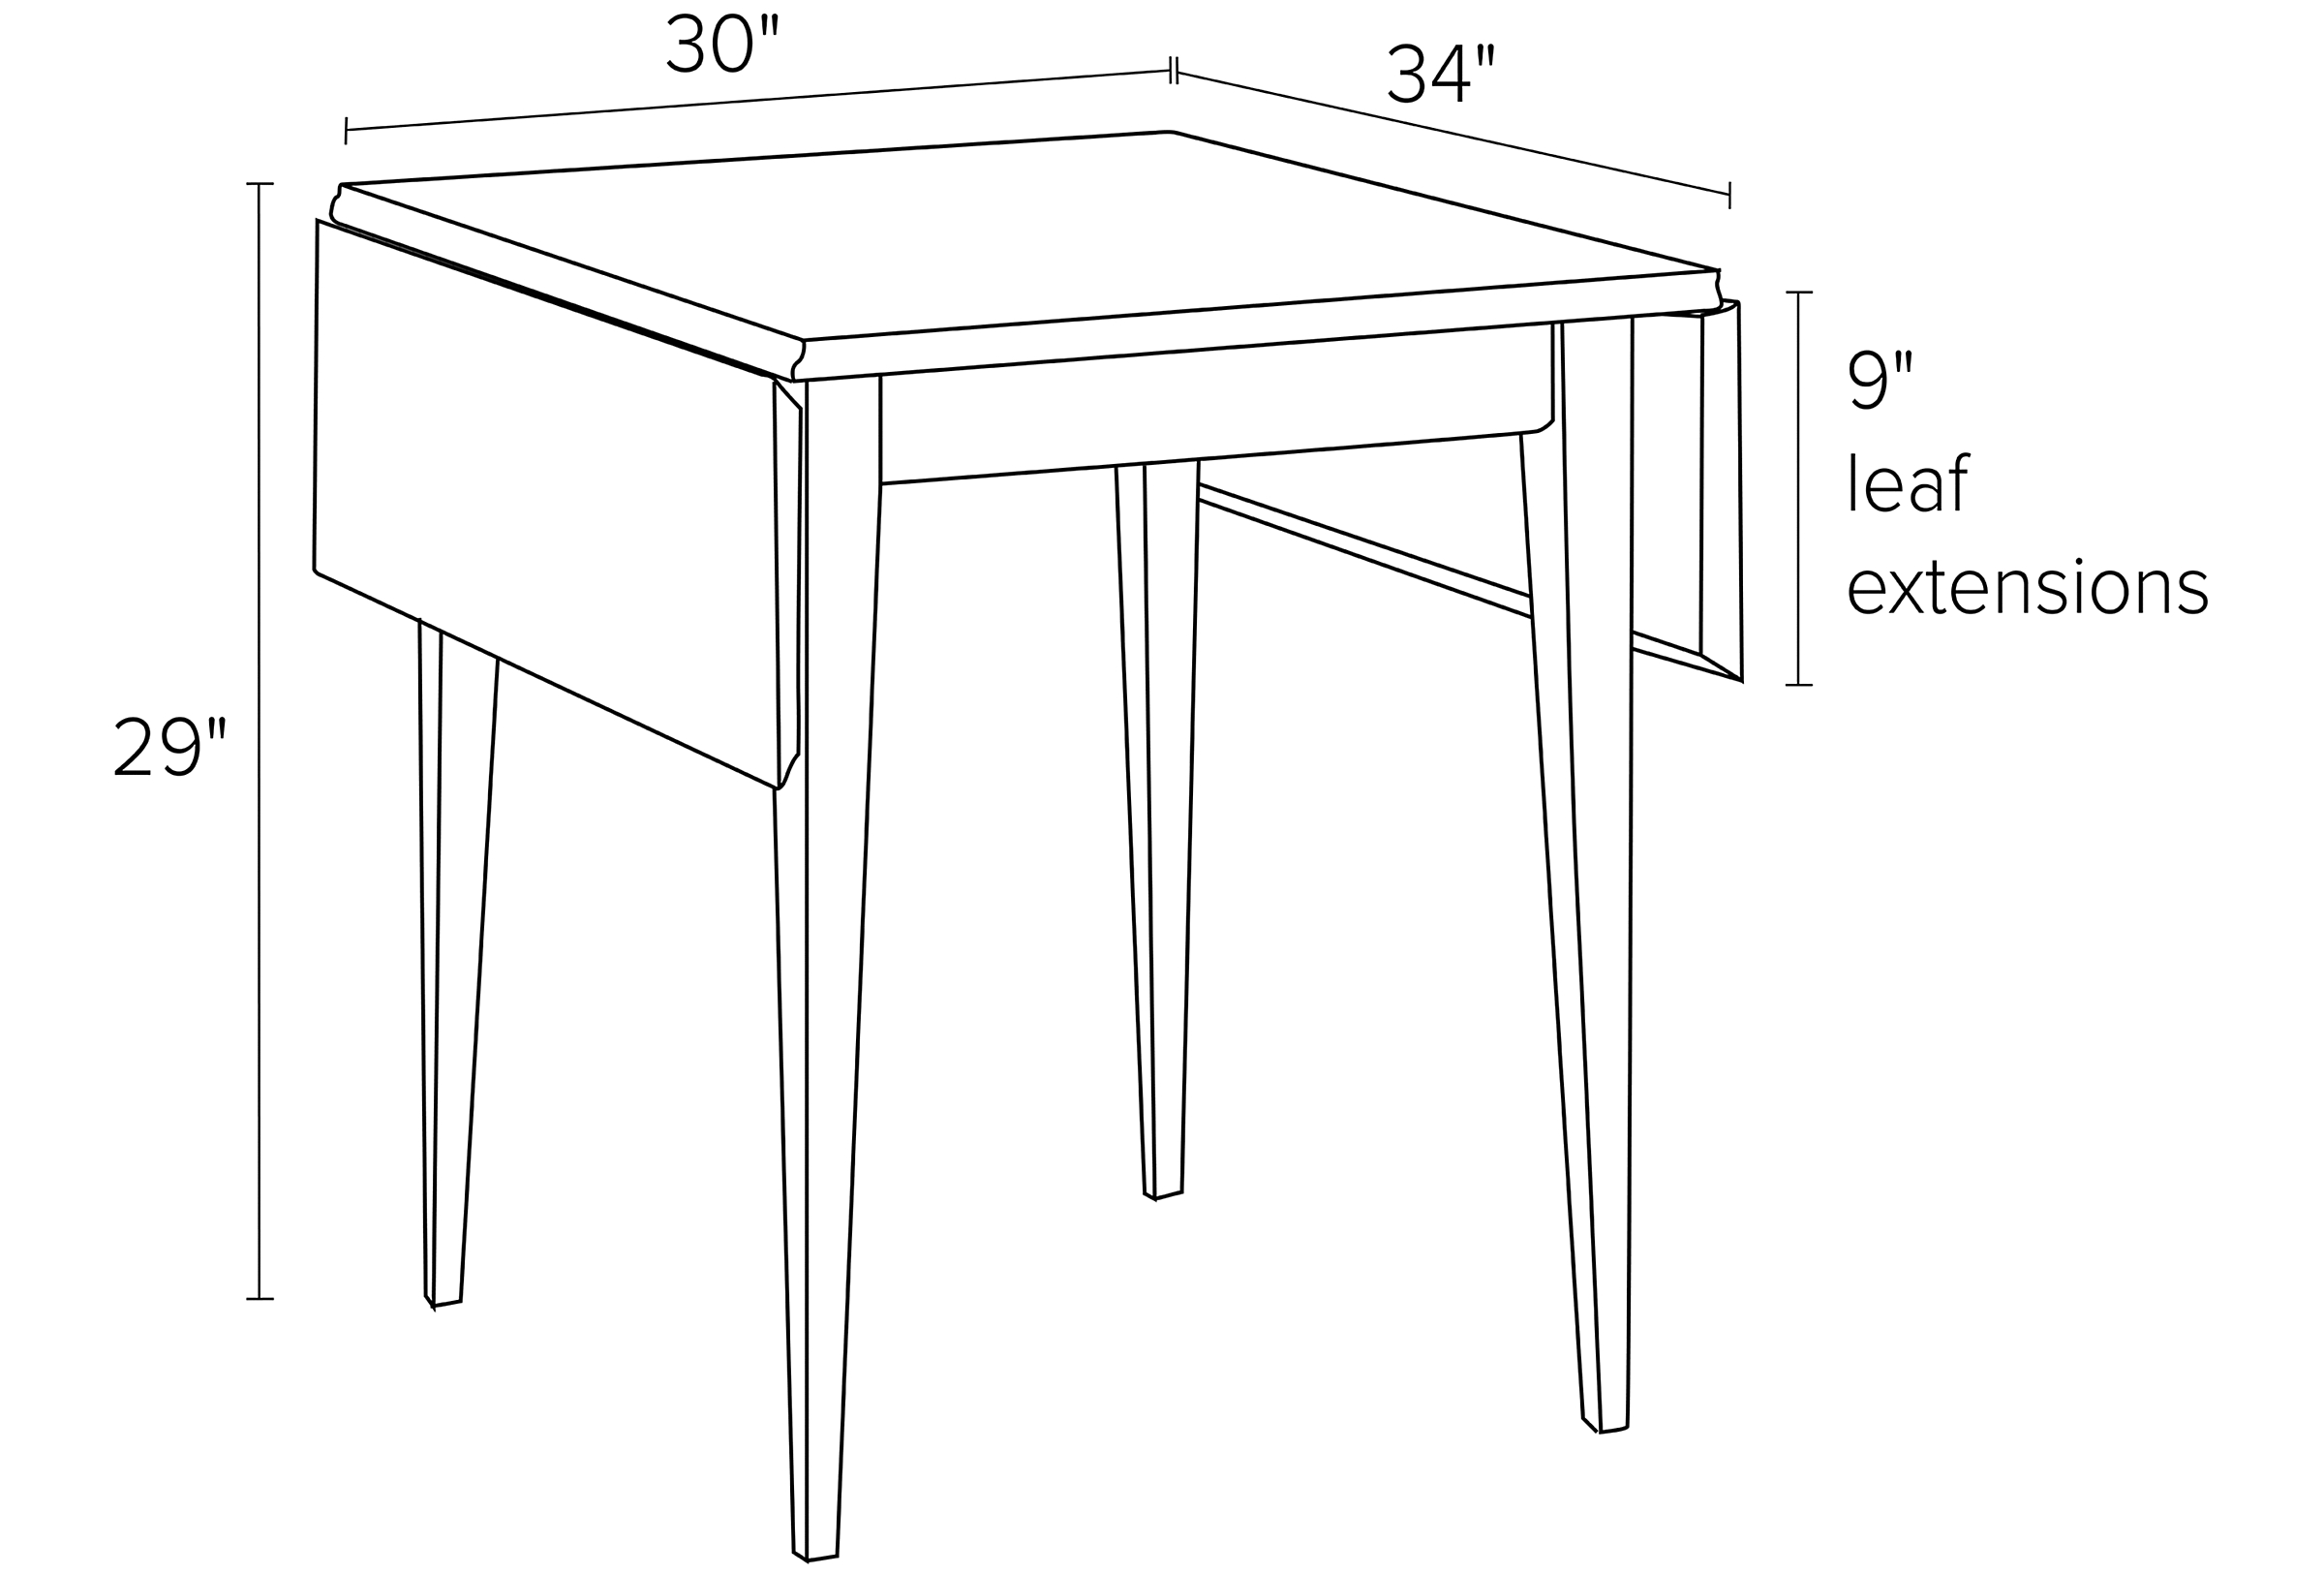 Illustration of Adams drop-leaf table dimensions.